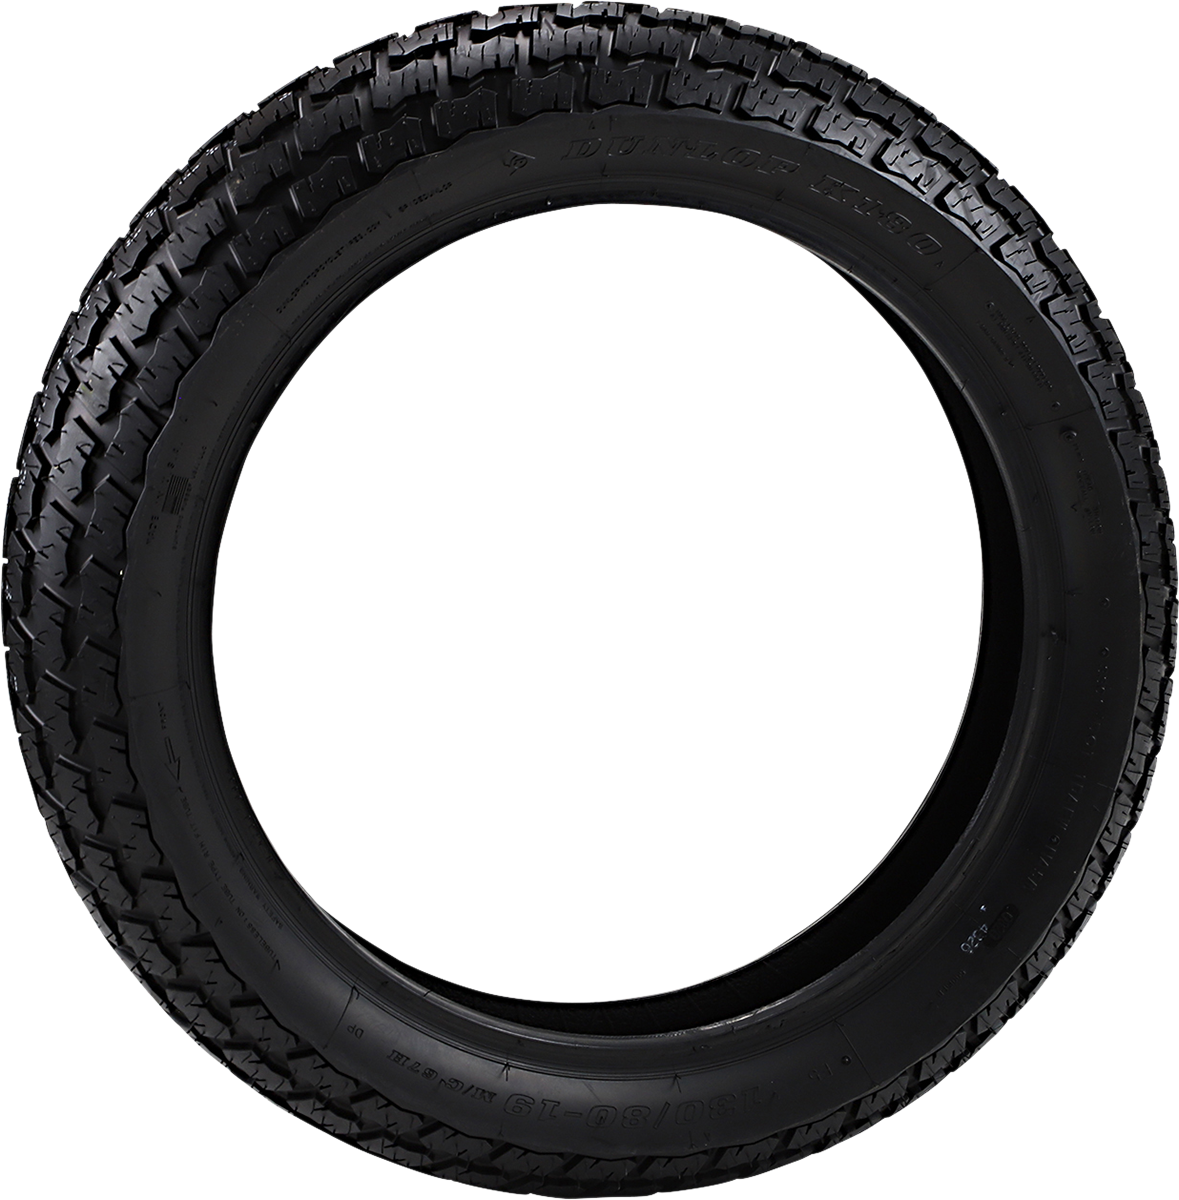 DUNLOP Tire - K180 - Front - 130/80-19 - 67H 45241428